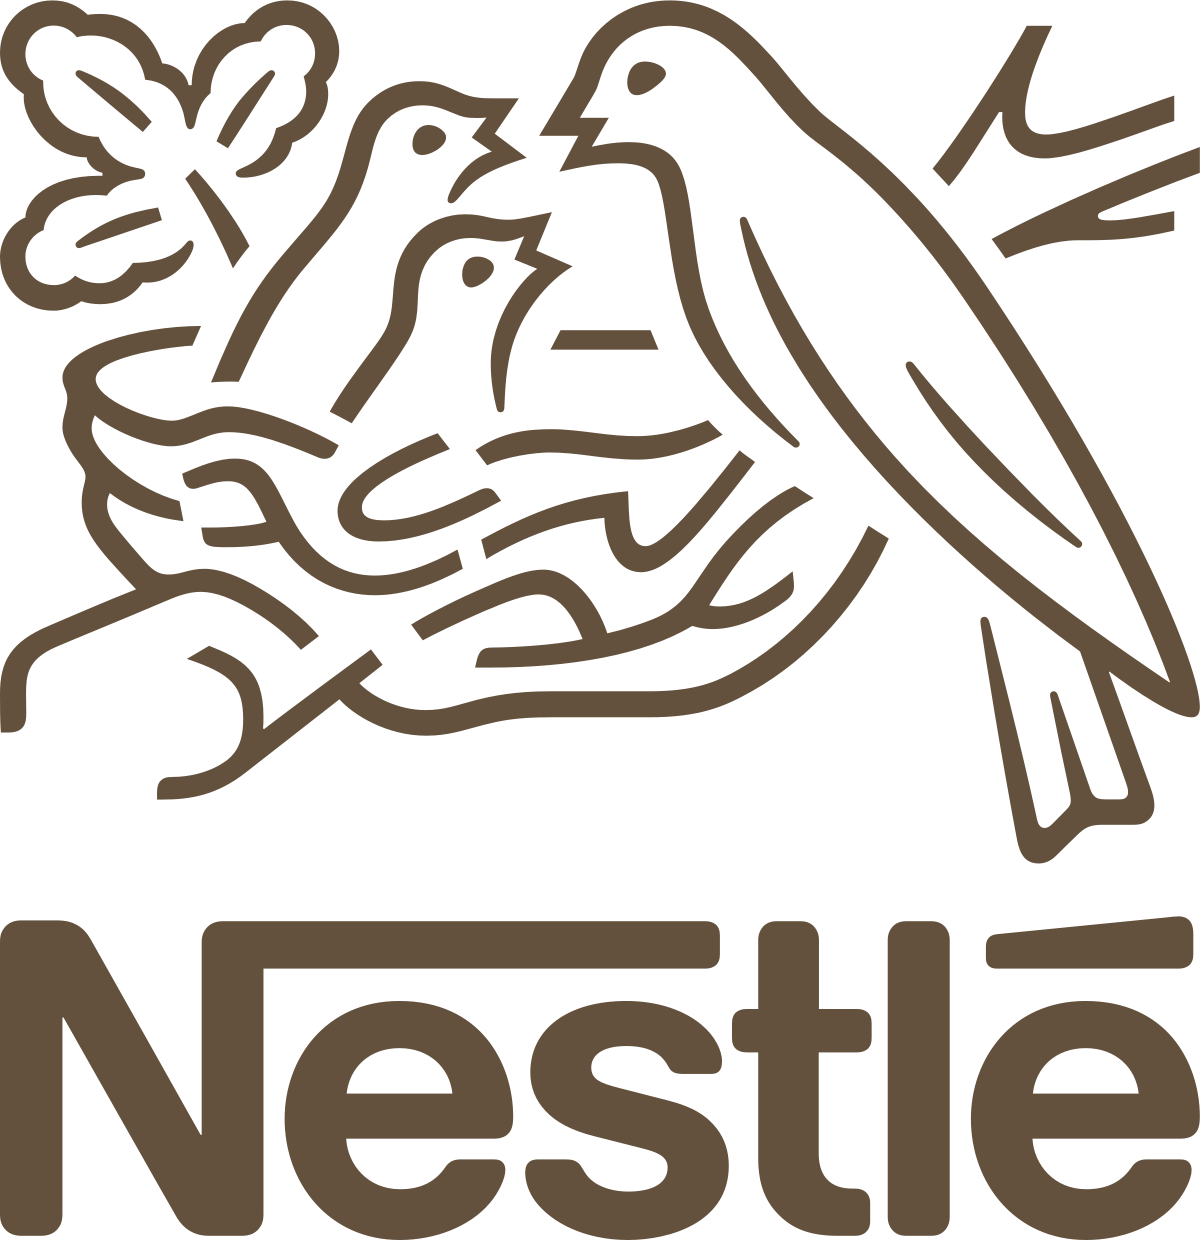 Nestle working on sustainable dairy alternatives